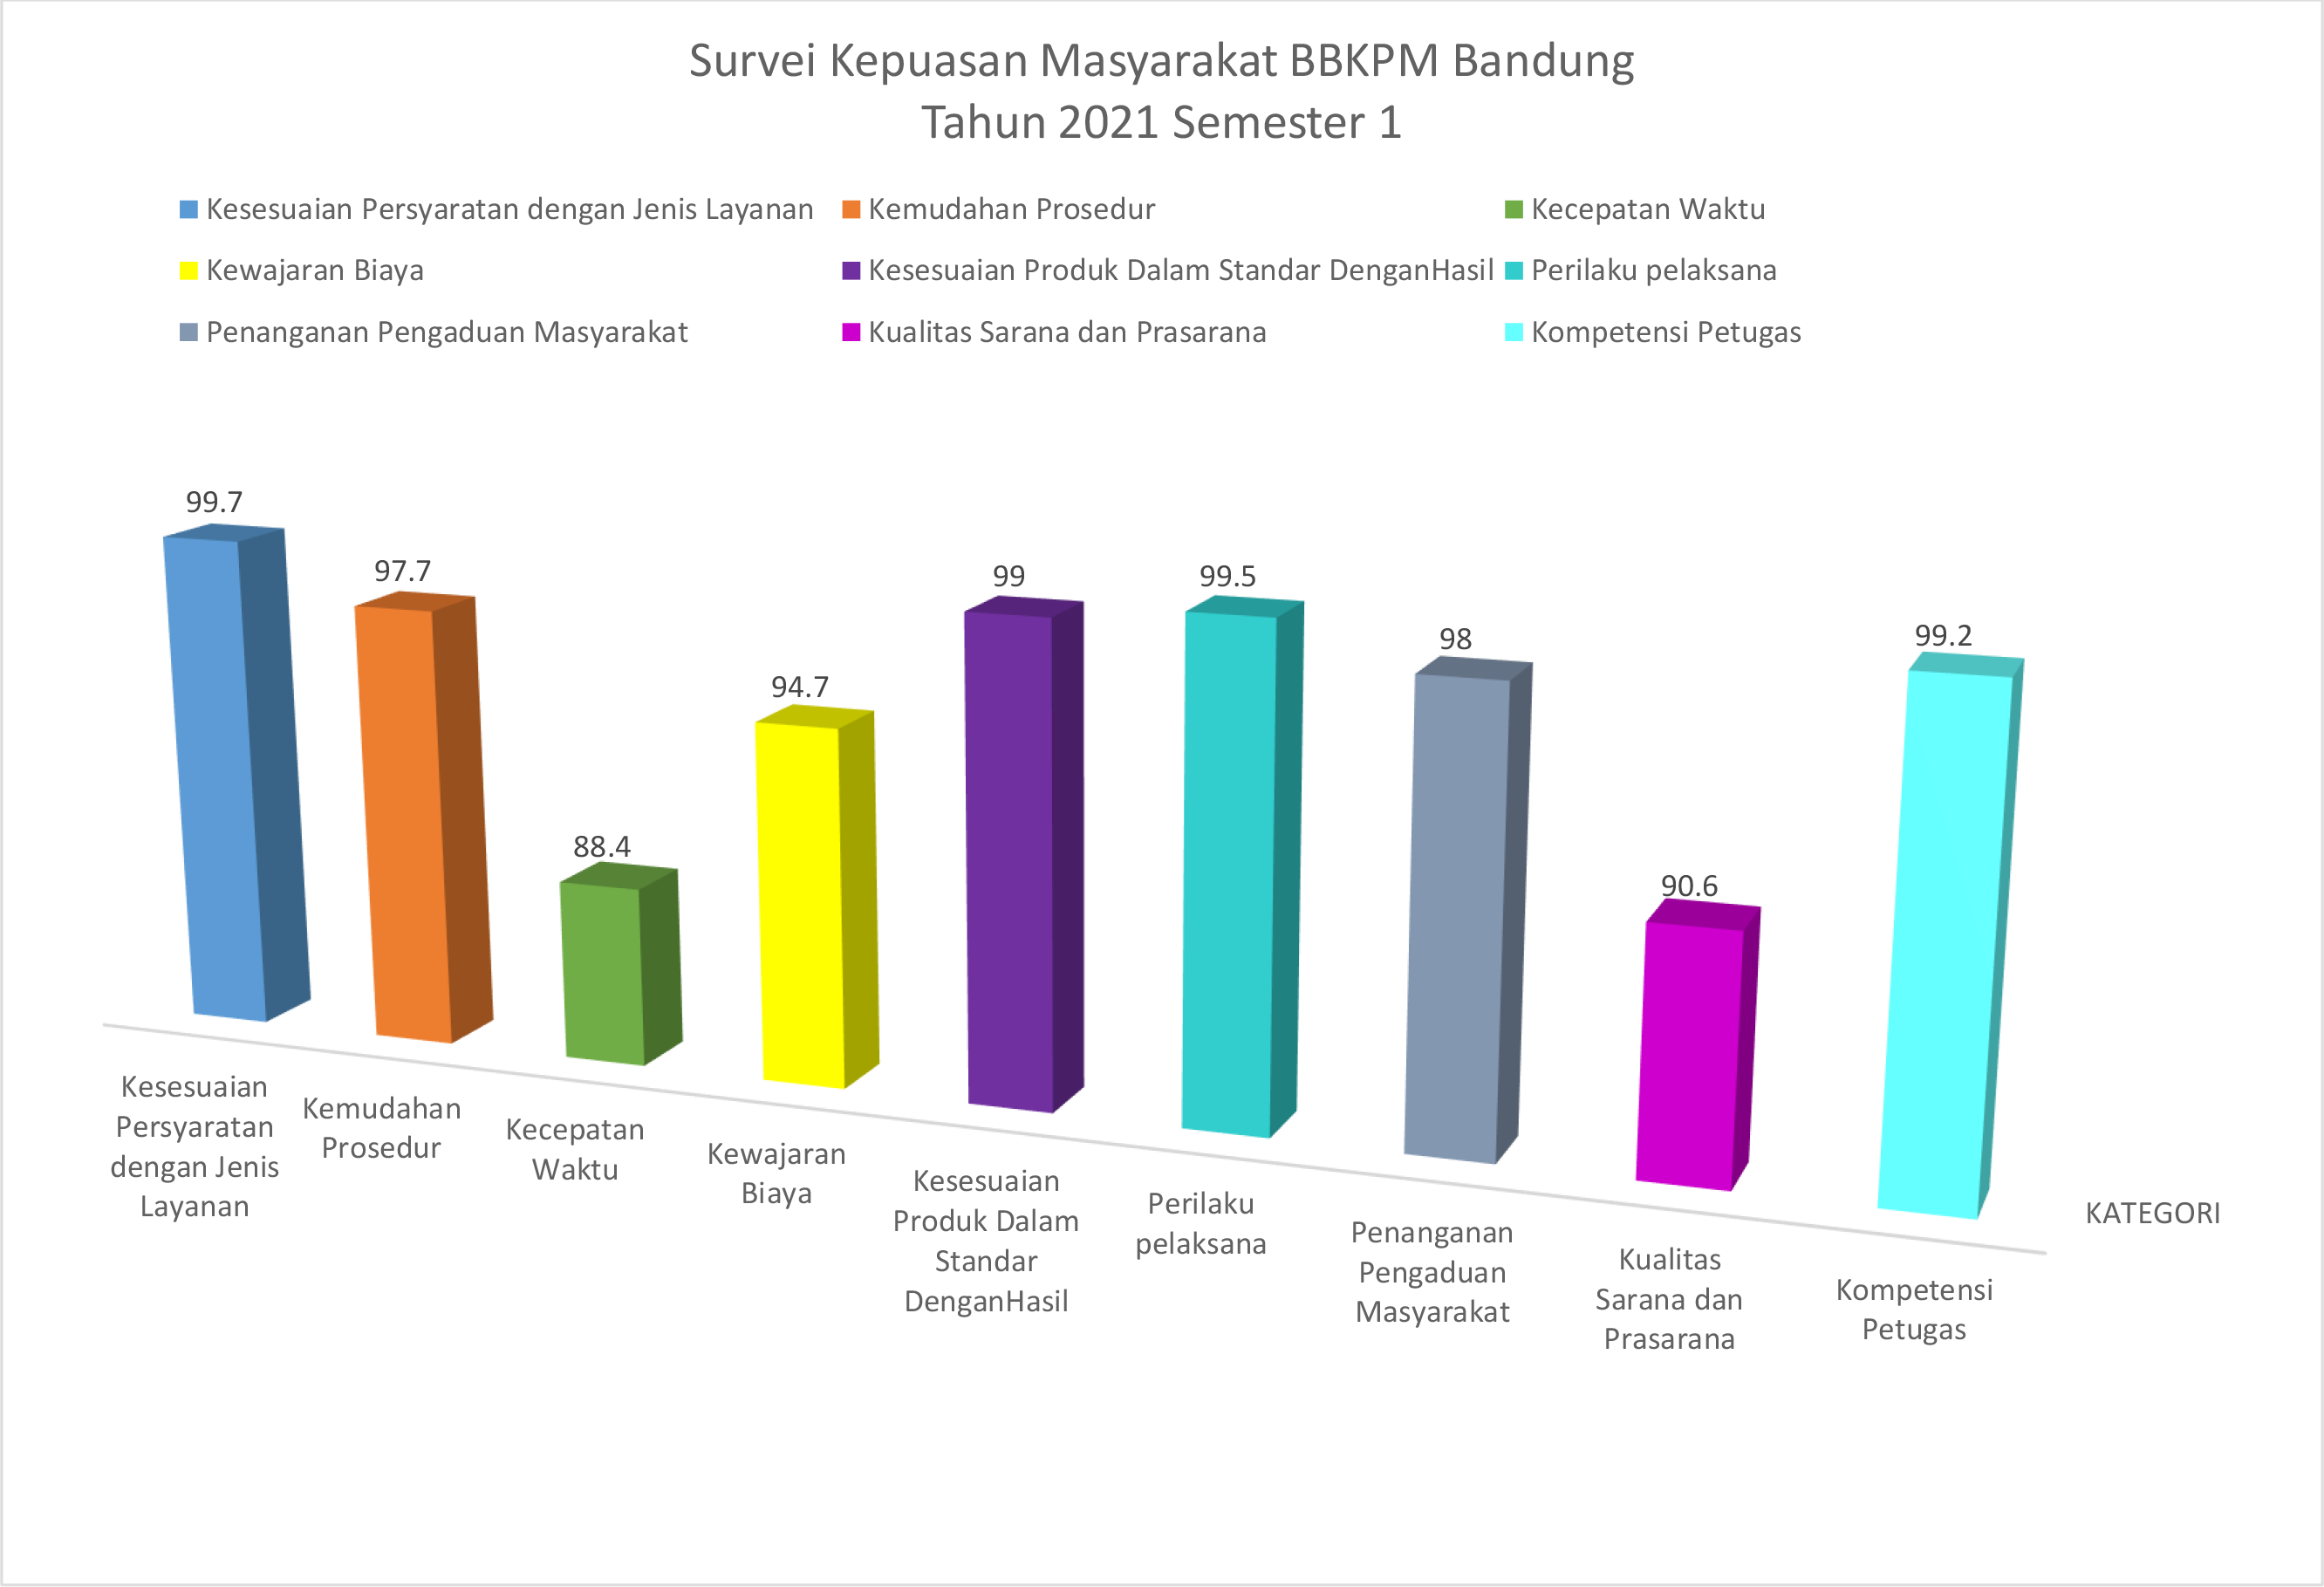 HASIL SURVEY KEPUASAN MASYARAKAT/BBKPM-BANDUNG 2021 SMTR 1